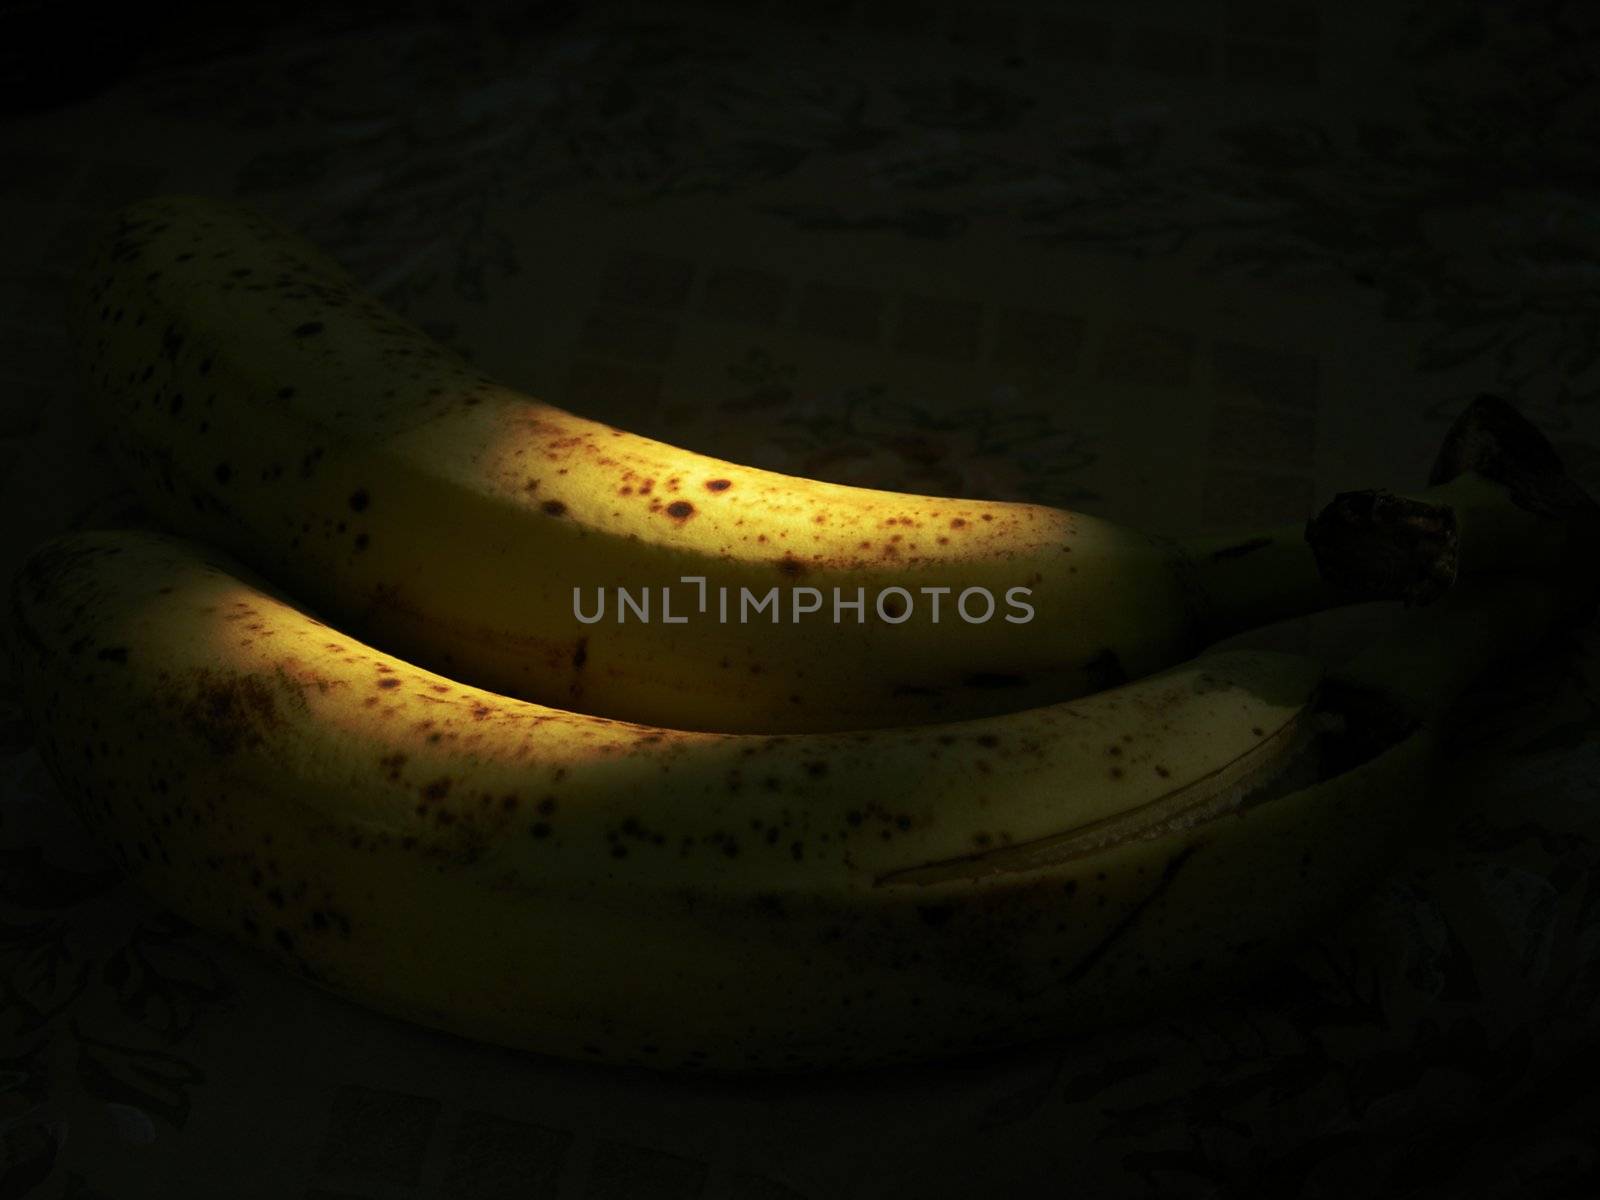 banana skin texture in the light rays